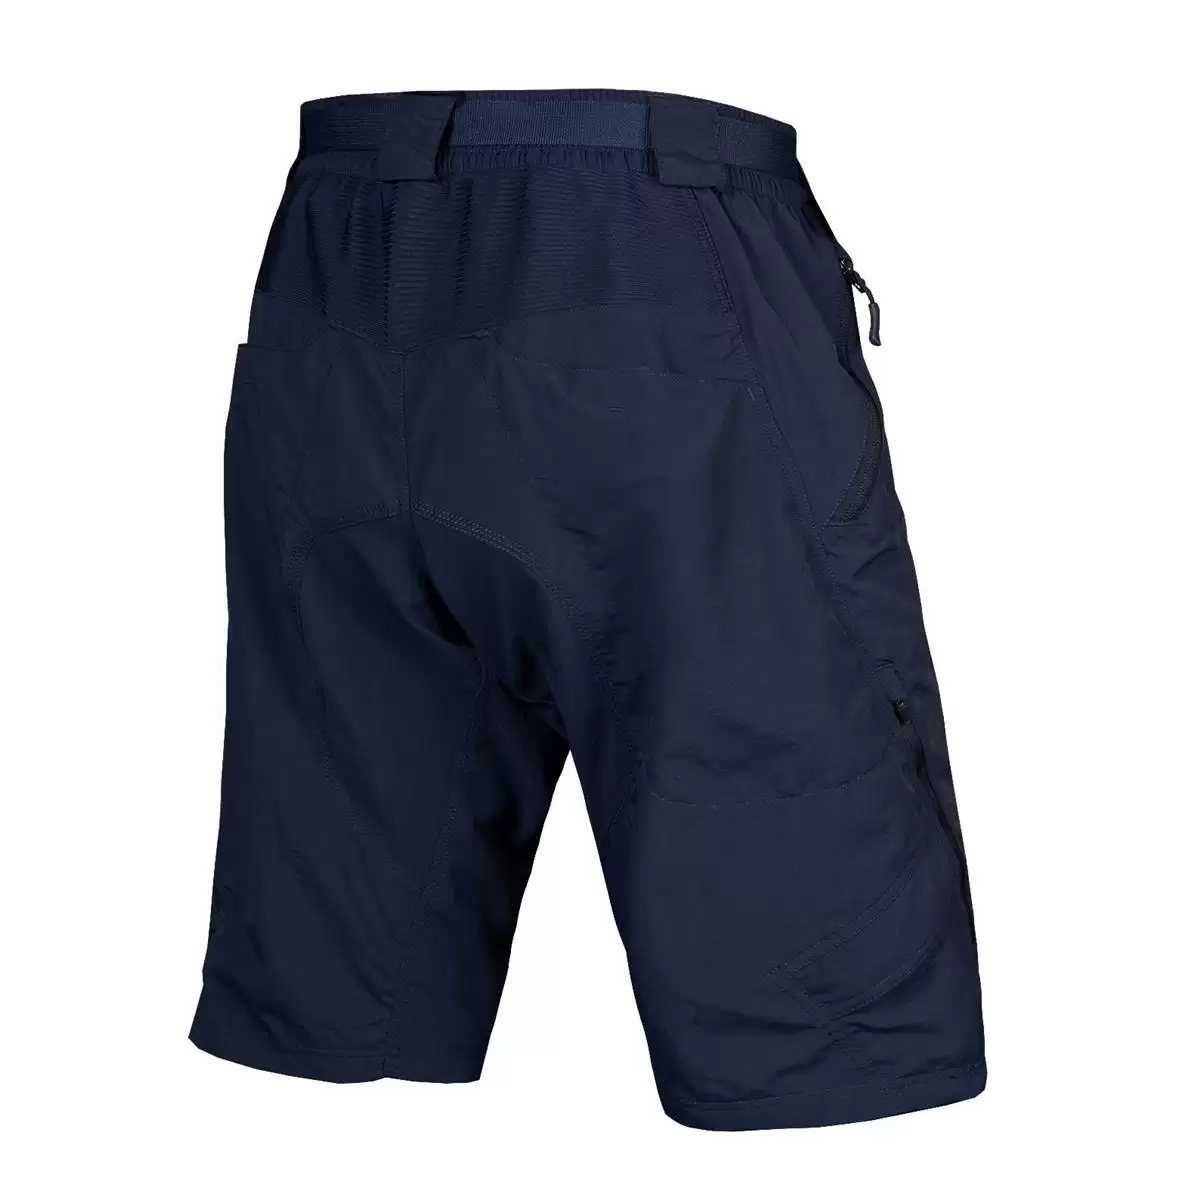 Pantalón corto acolchado Hummvee Short II azul talla M #1